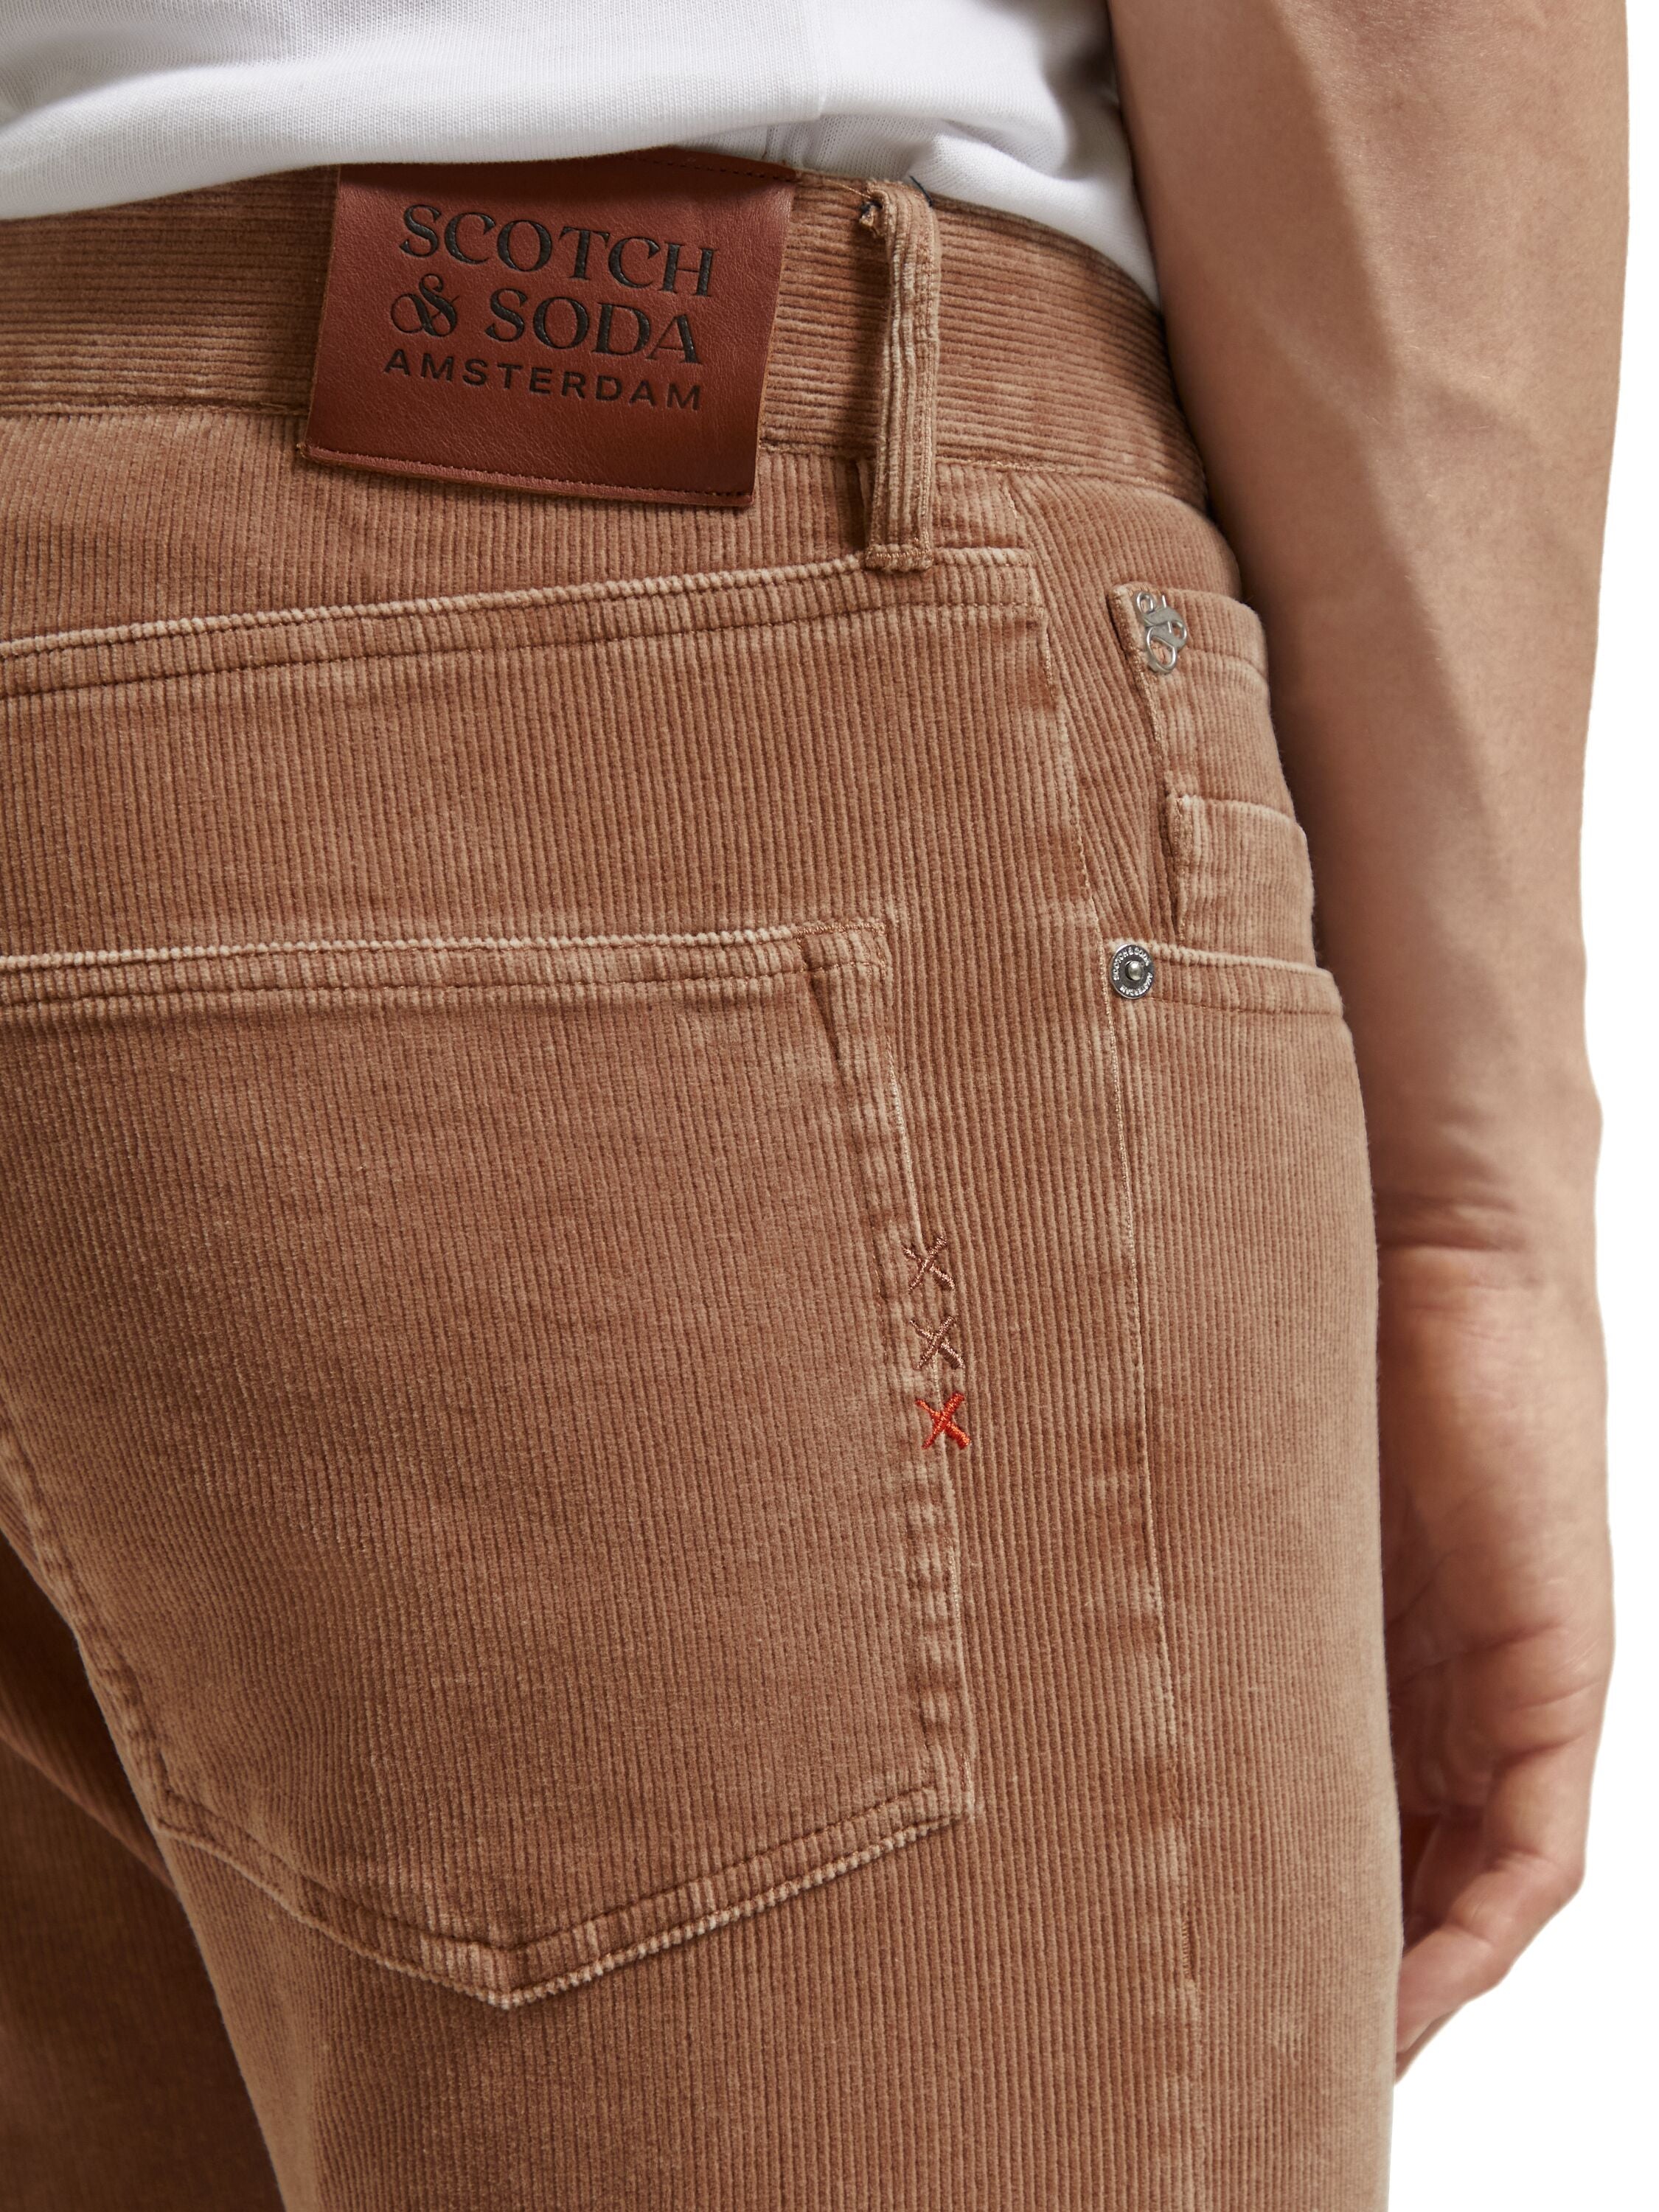 Regular slim Ralston corduroy jeans in Organic Cotton Camel